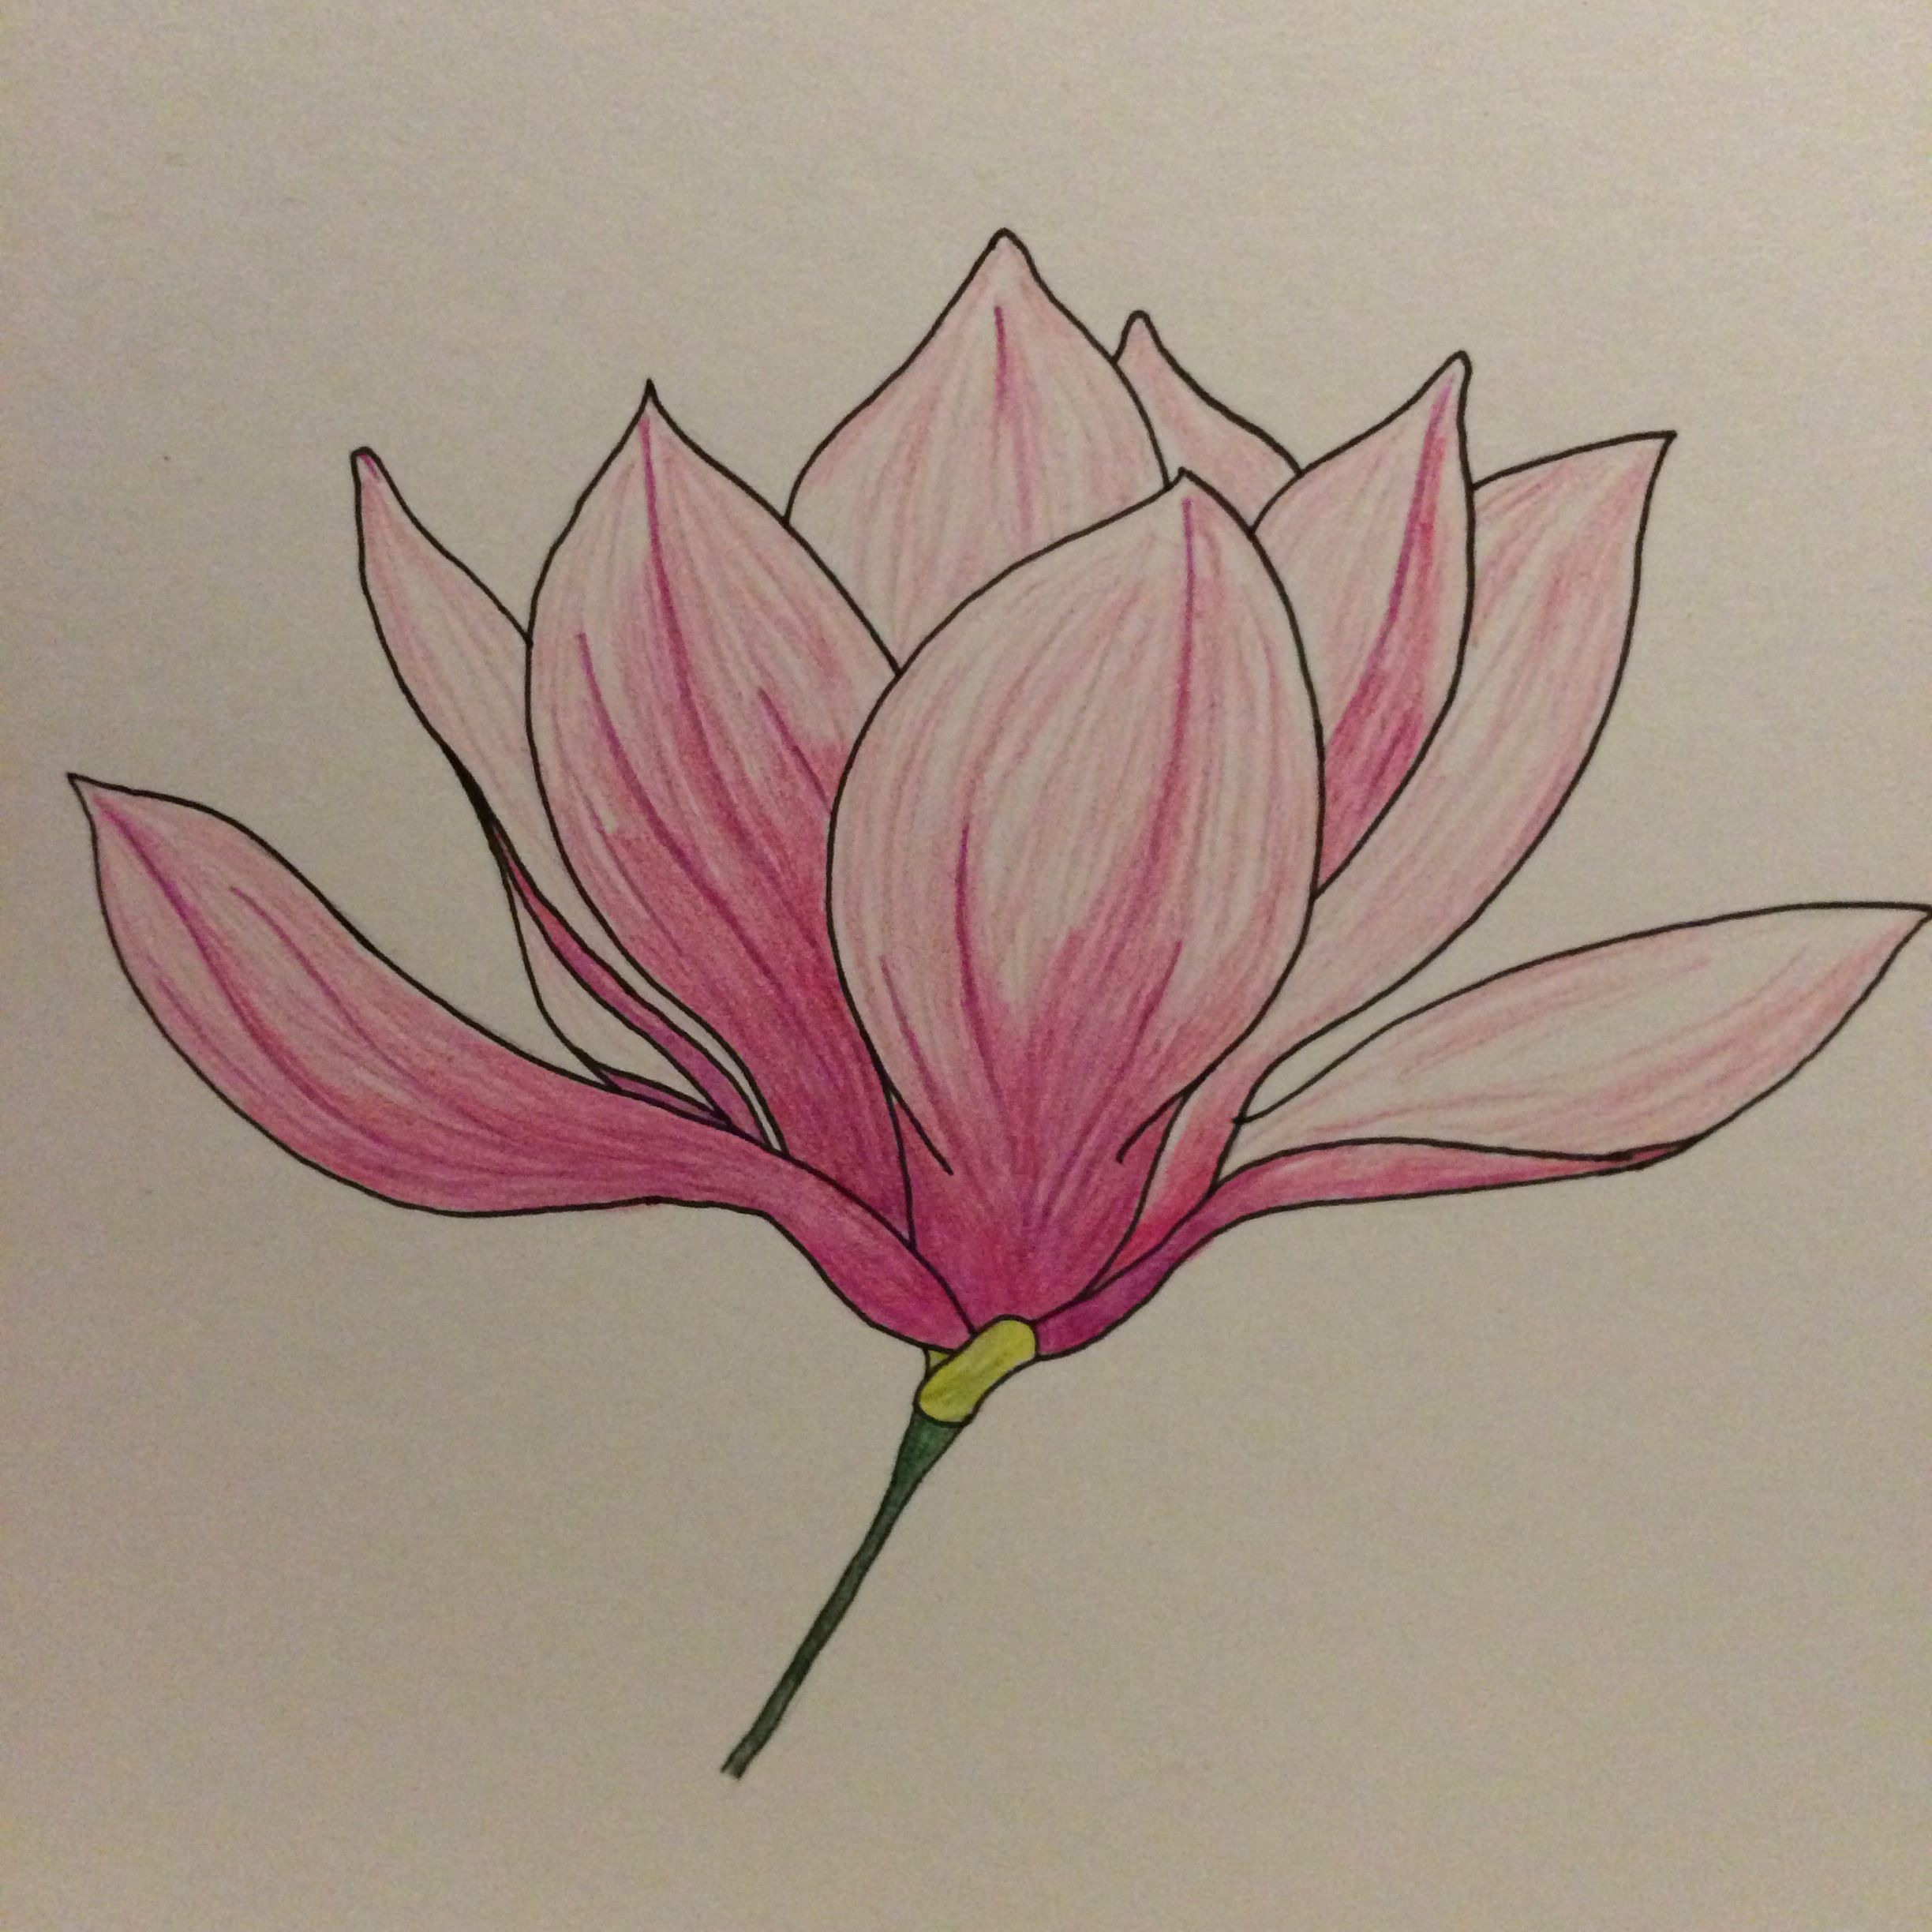 Magnolia Flower Drawing at GetDrawings | Free download